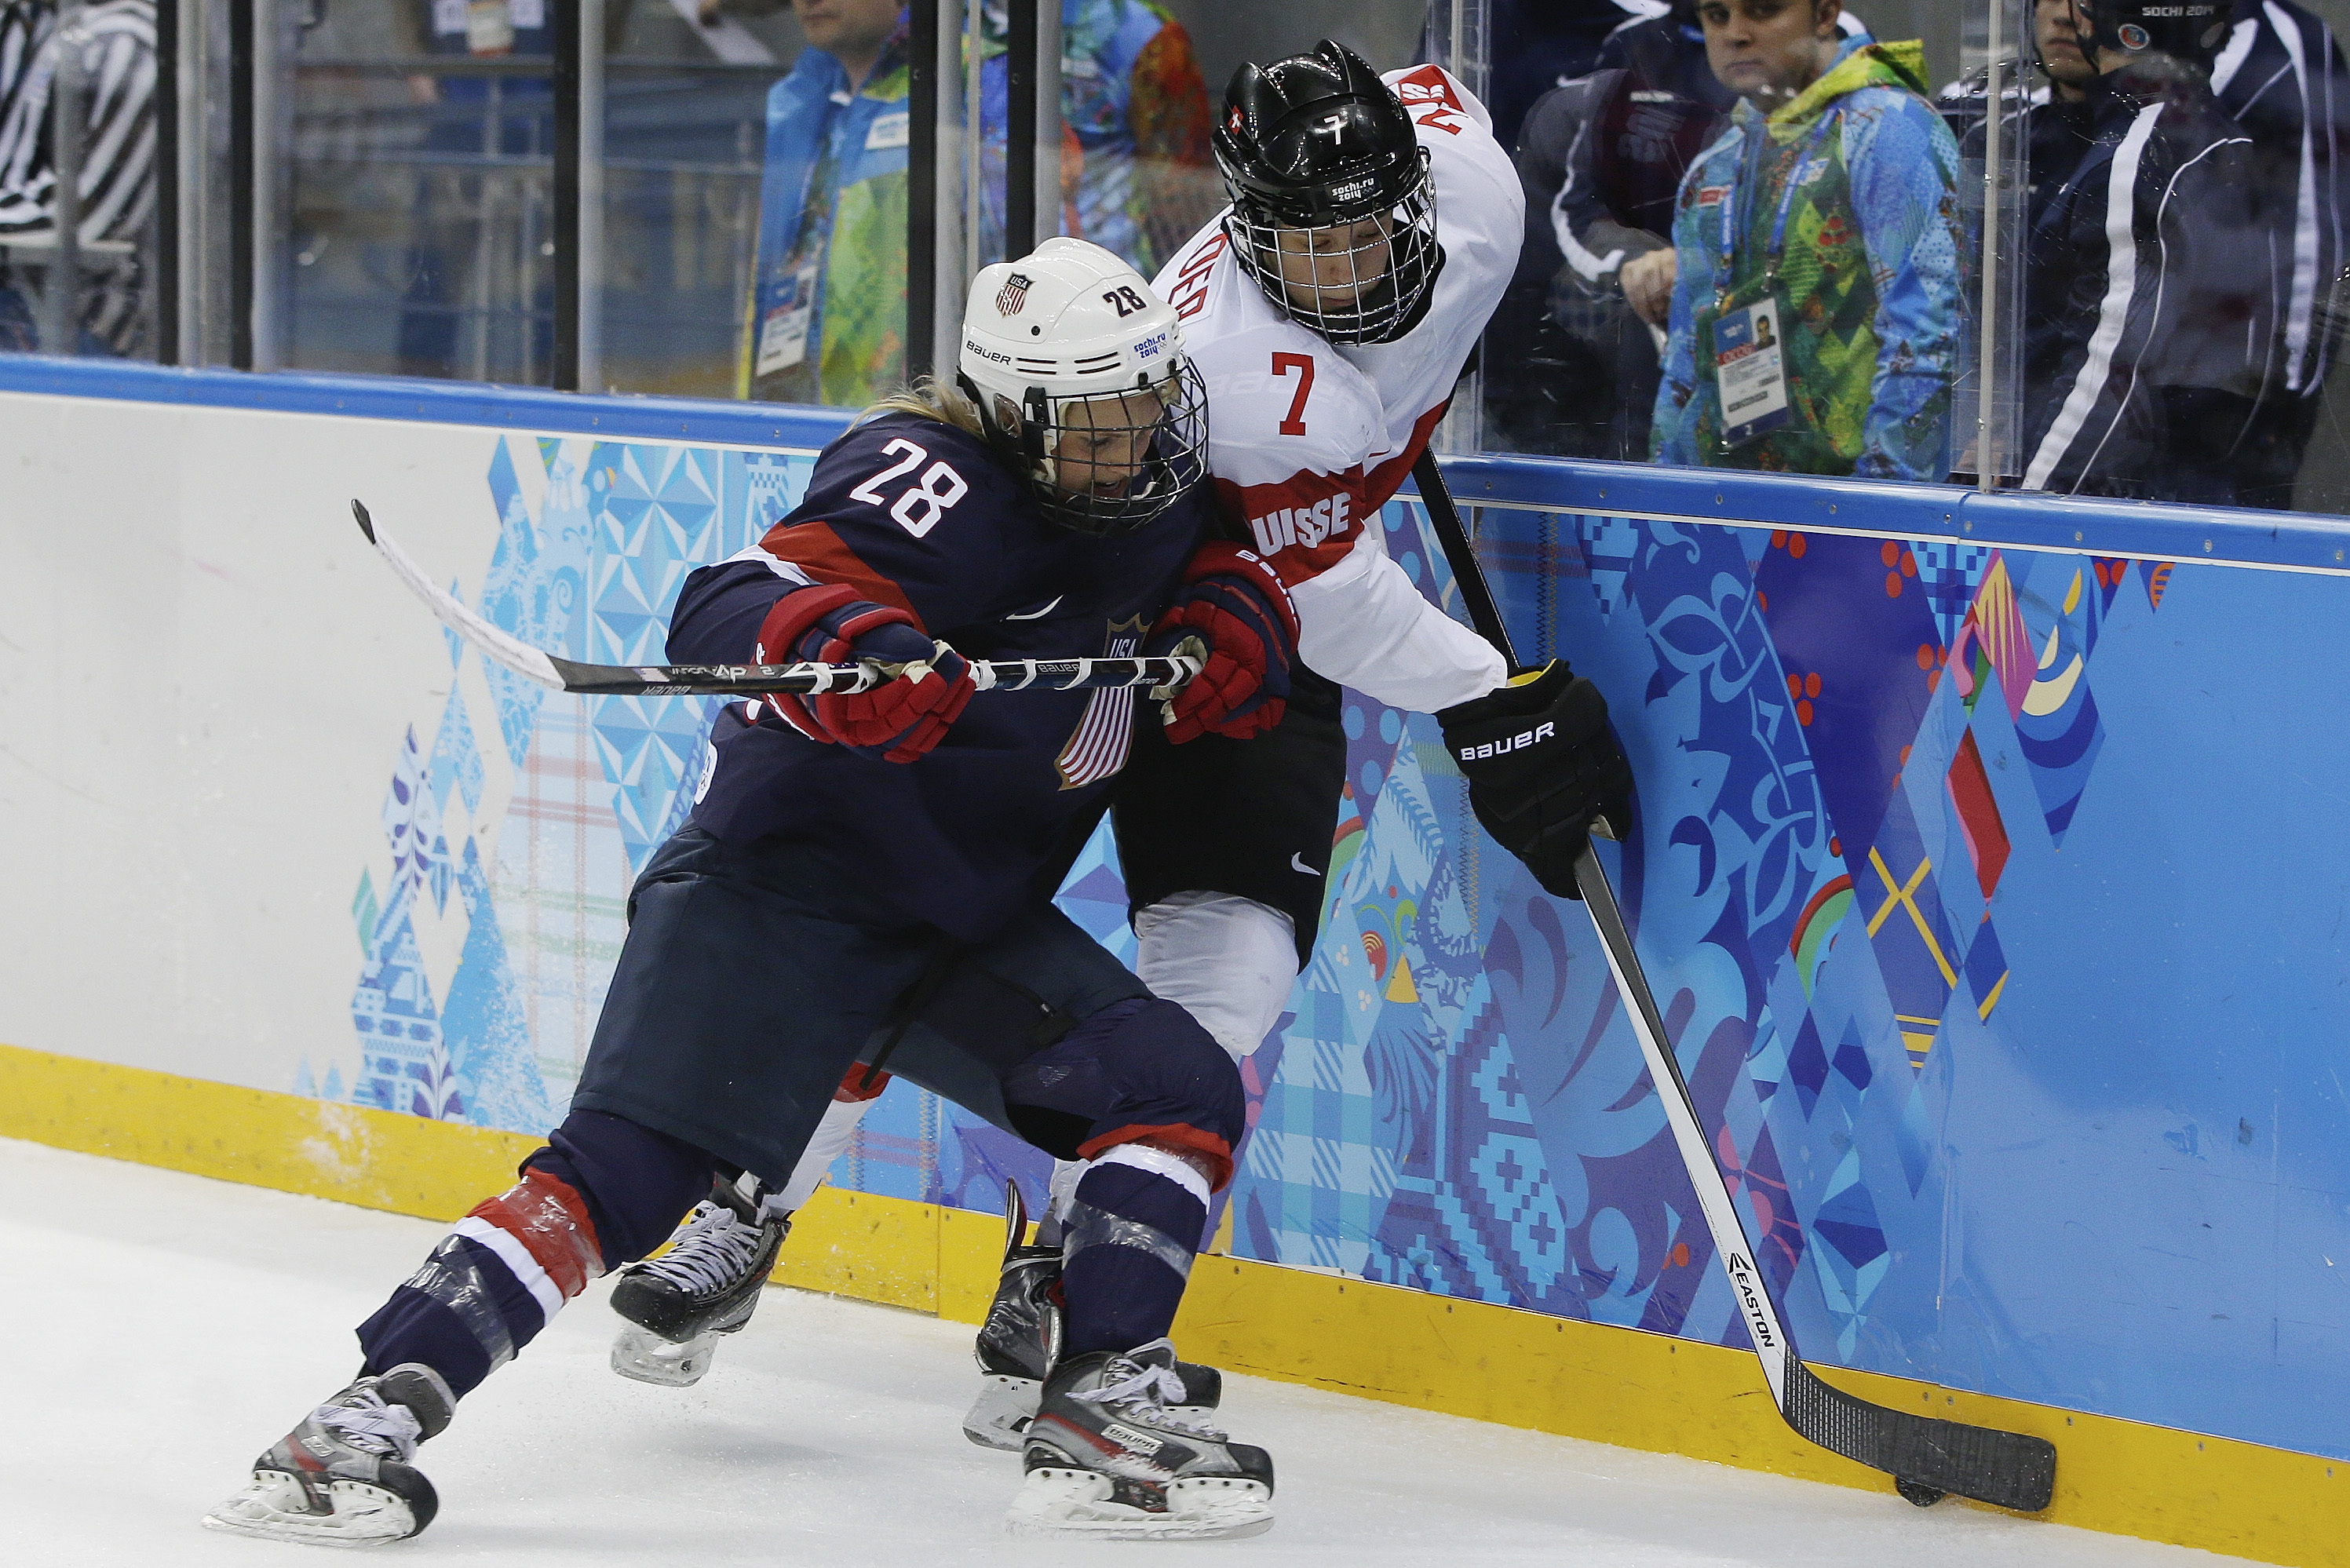 Canada Win Ice Hockey Gold V USA - Highlights - Vancouver 2010